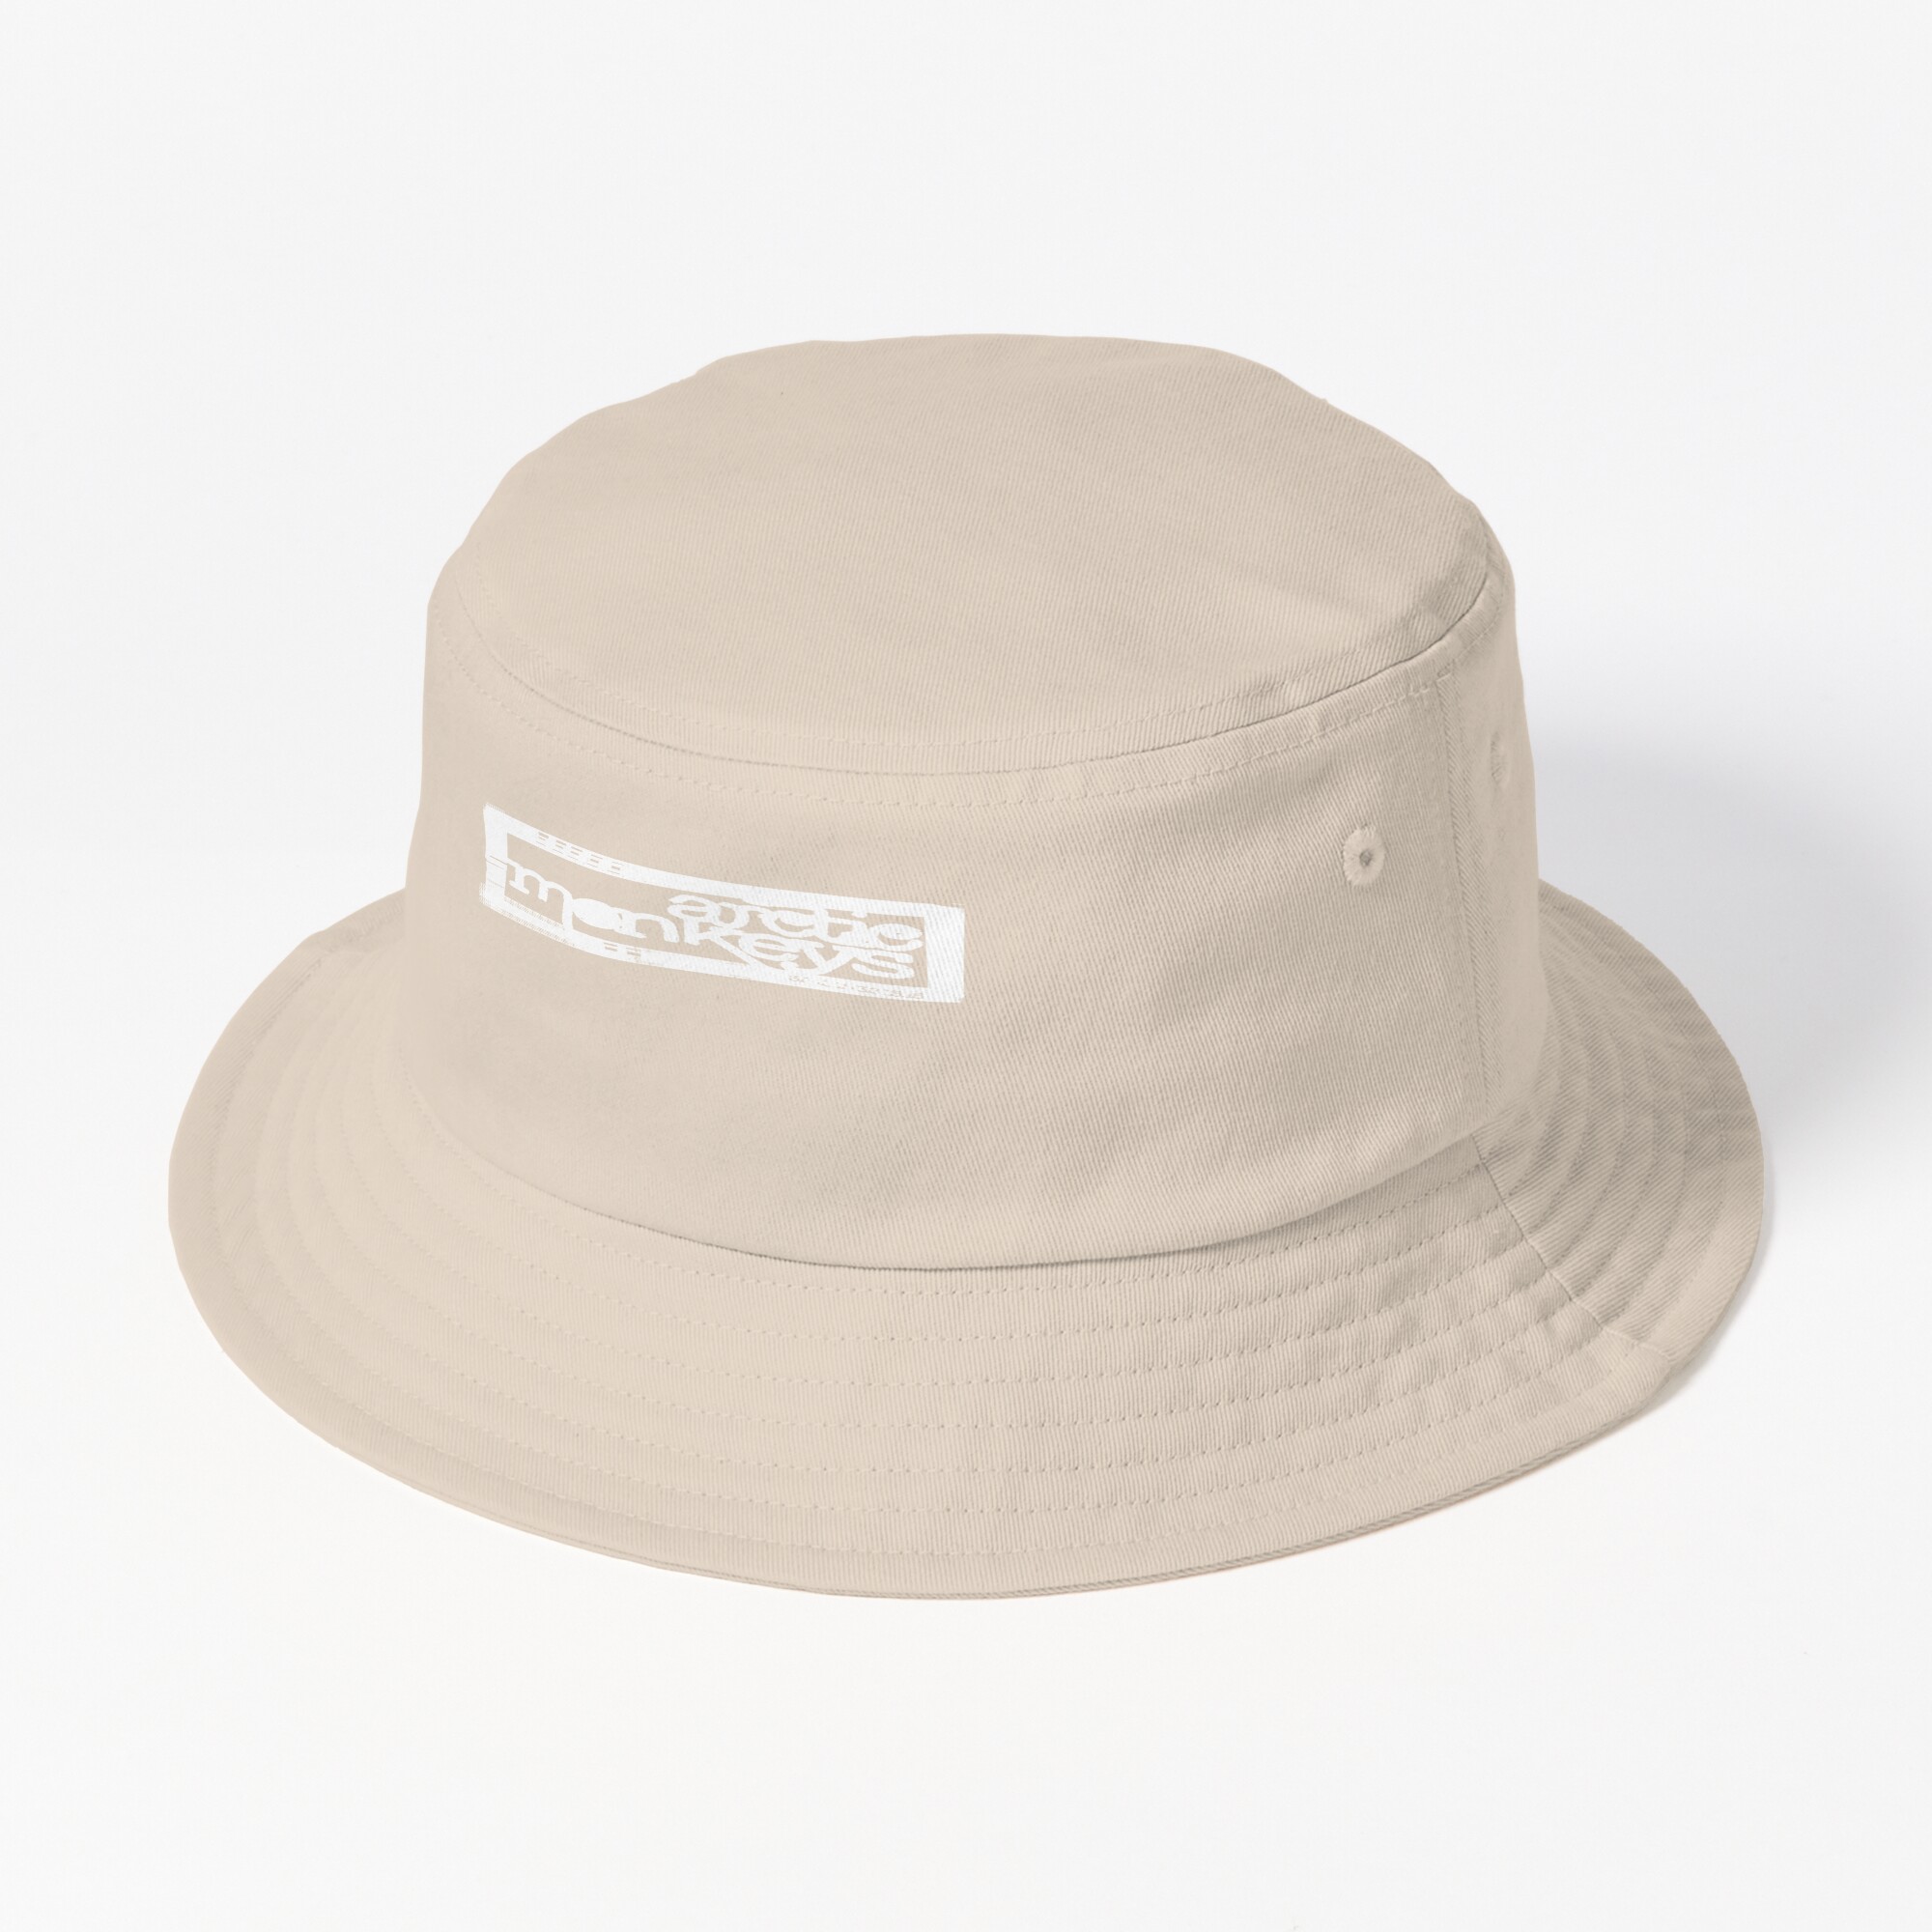 ssrcobucket hatproducte5d6c5f62bbf65eeprimarysquare2000x2000 bgf8f8f8 1 - Arctic Monkeys Shop